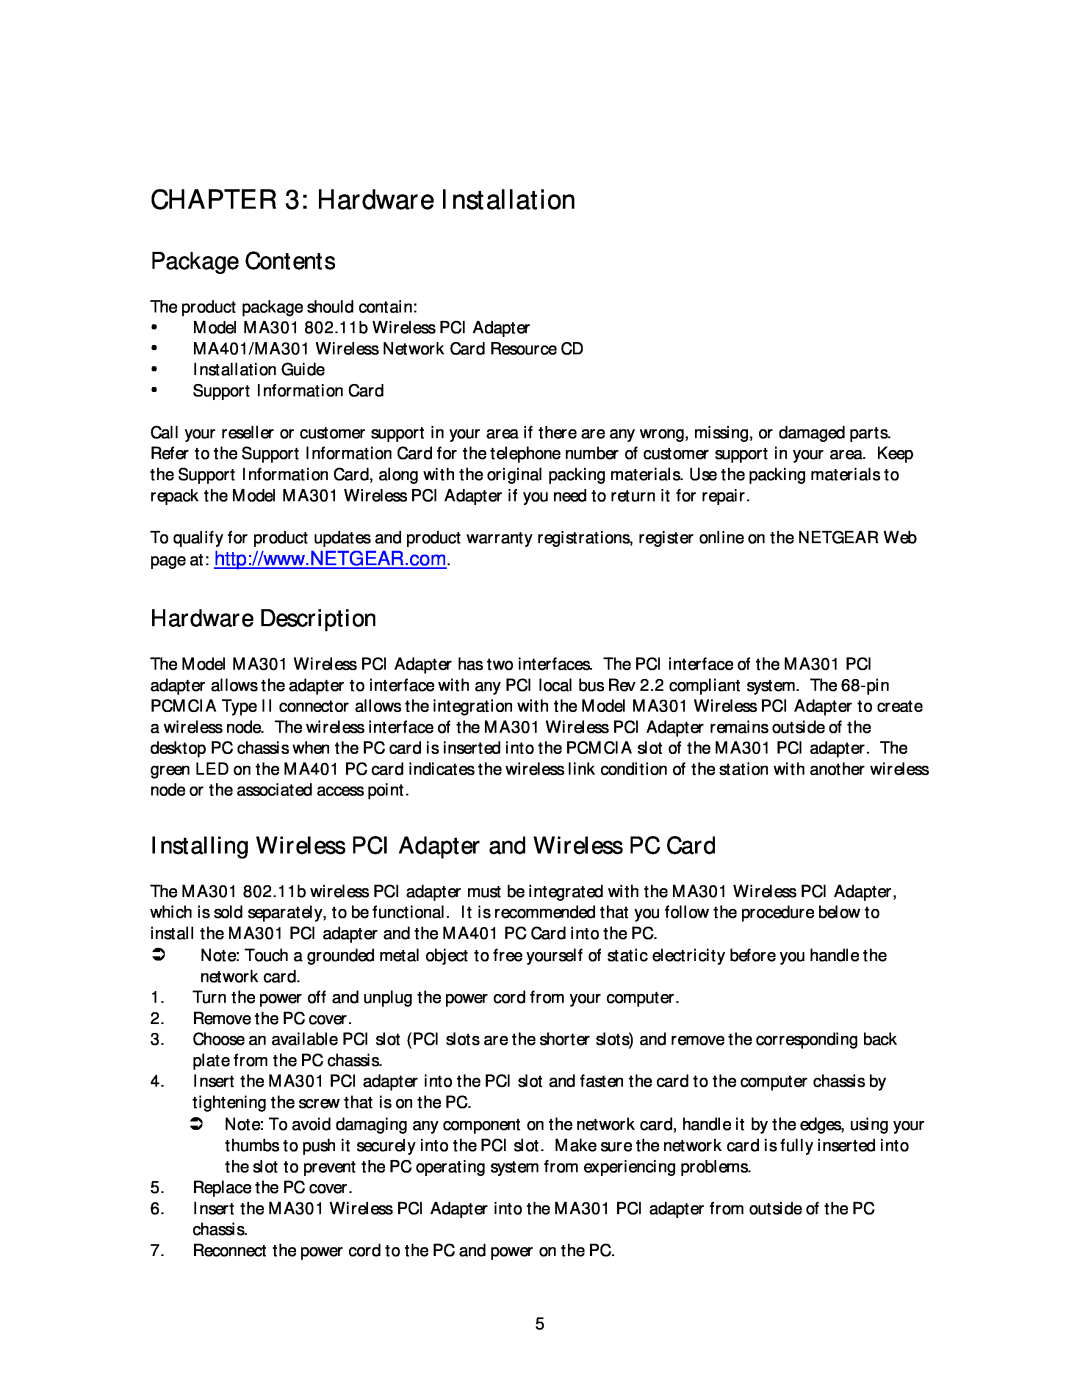 NETGEAR MA 301 manual Hardware Installation, Package Contents, Hardware Description 